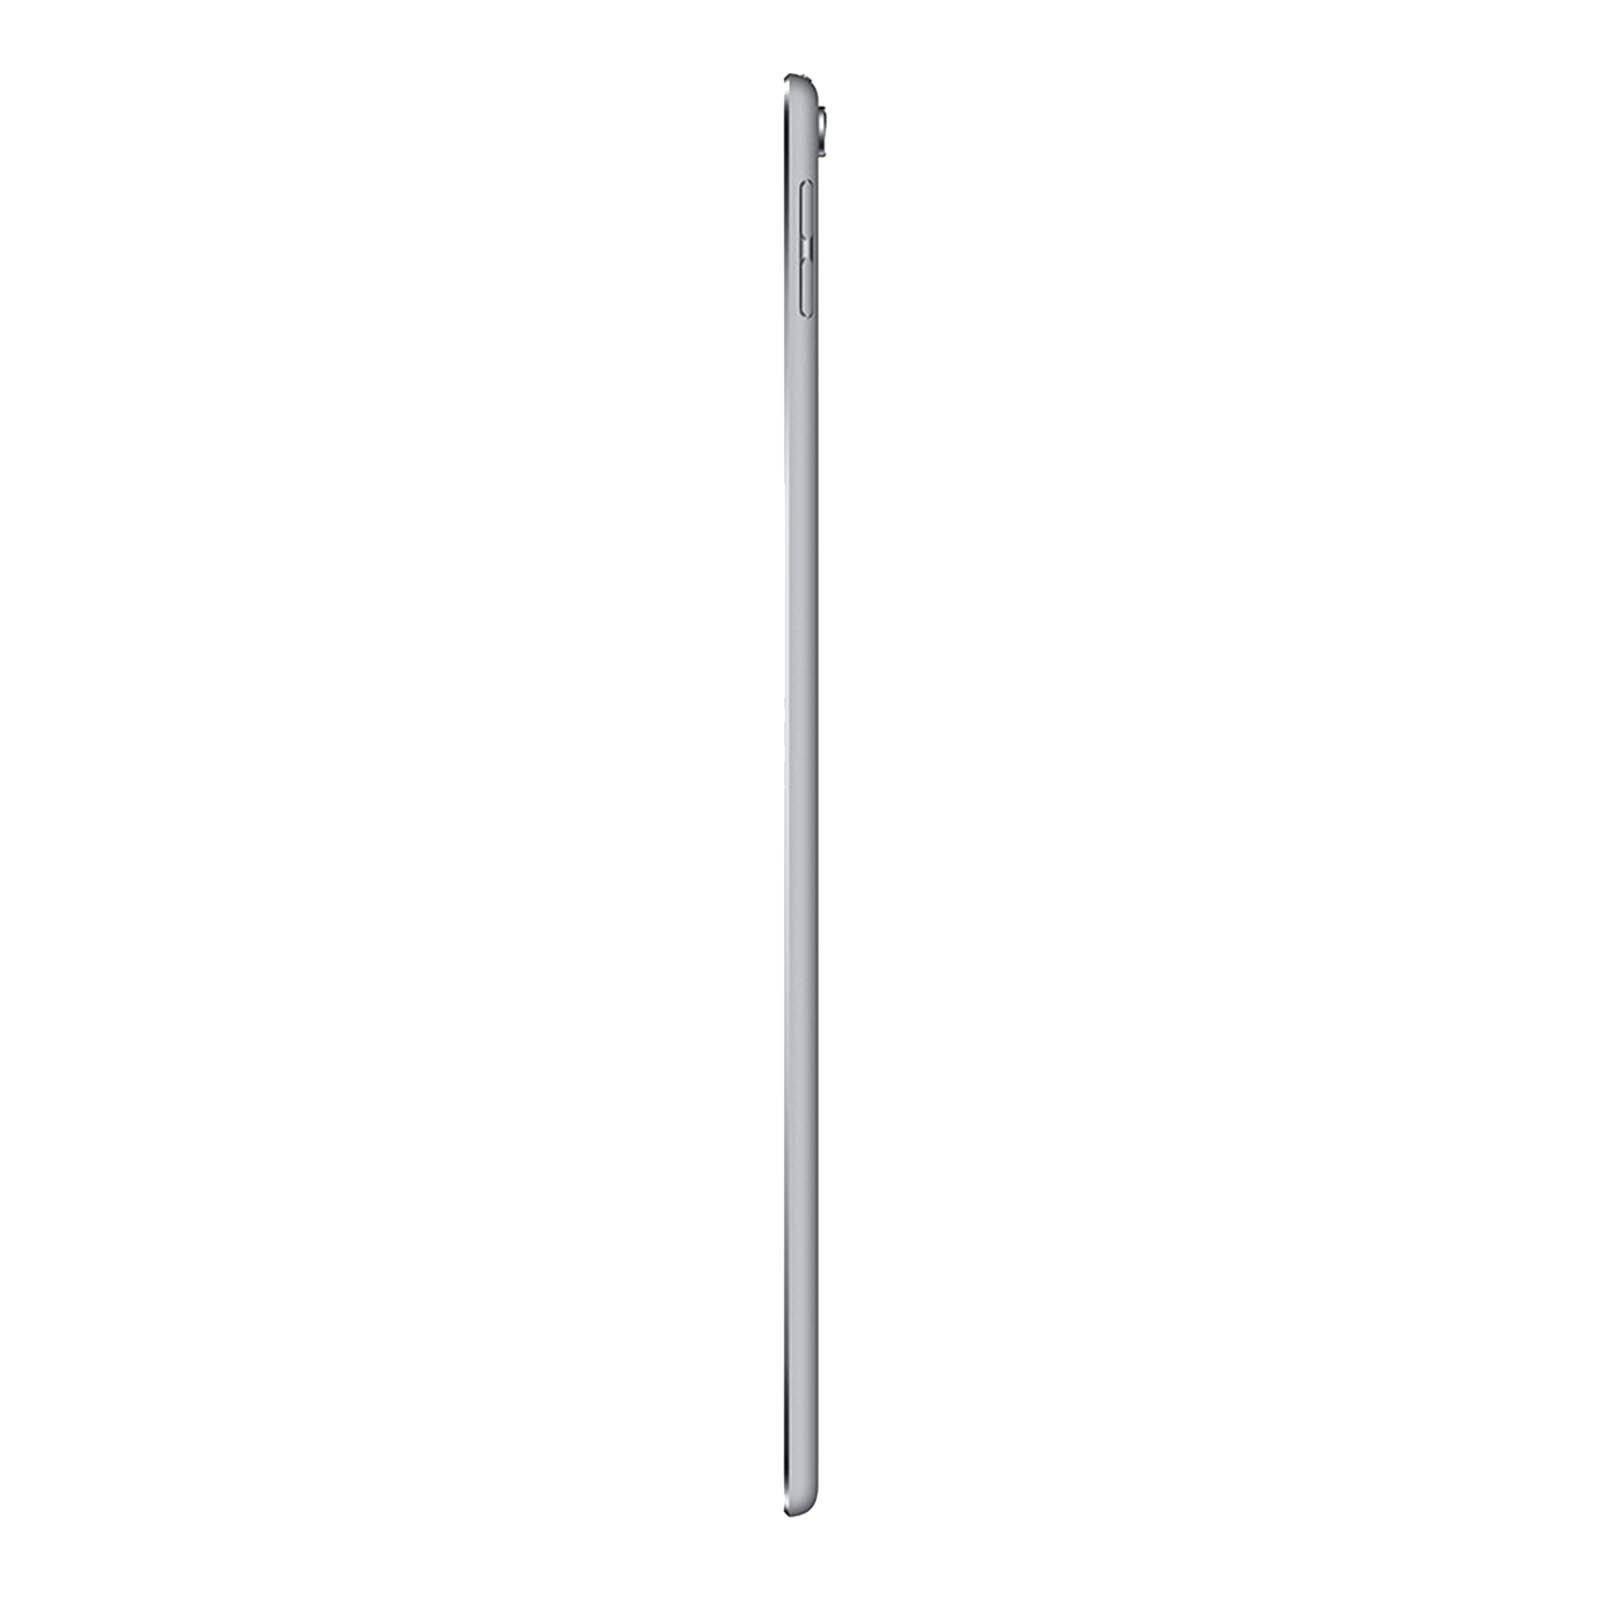 iPad Pro 10.5 Inch 256GB Space Grey Pristine - Unlocked